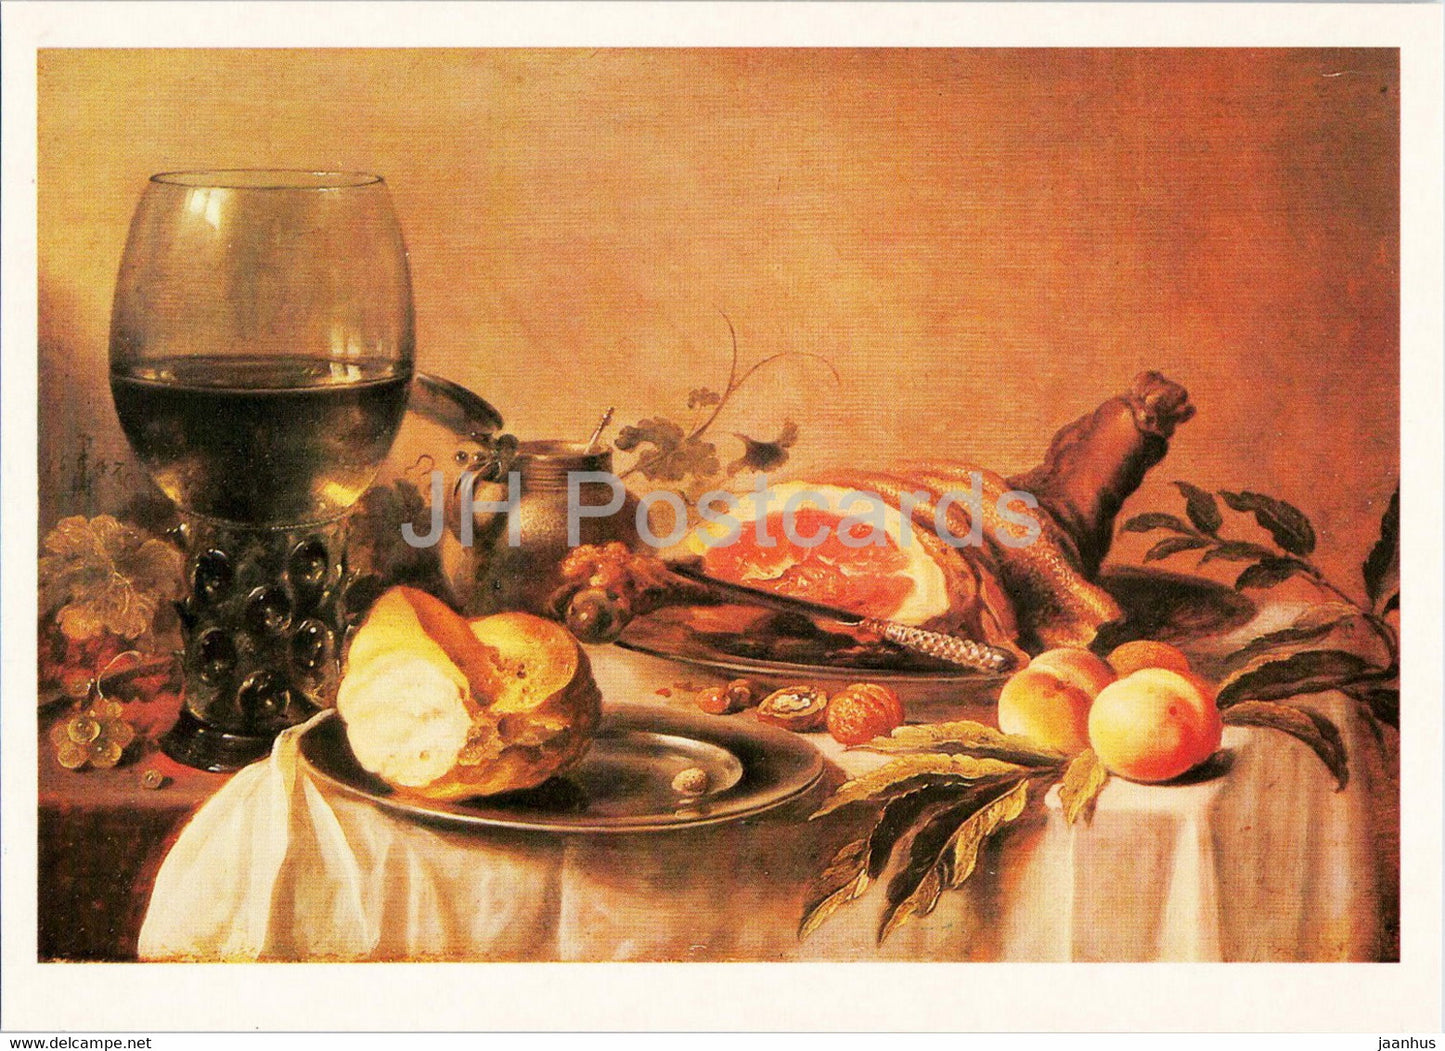 painting by Pieter Claesz - Breakfast with Ham - Dutch art - 1987 - Russia USSR - unused - JH Postcards